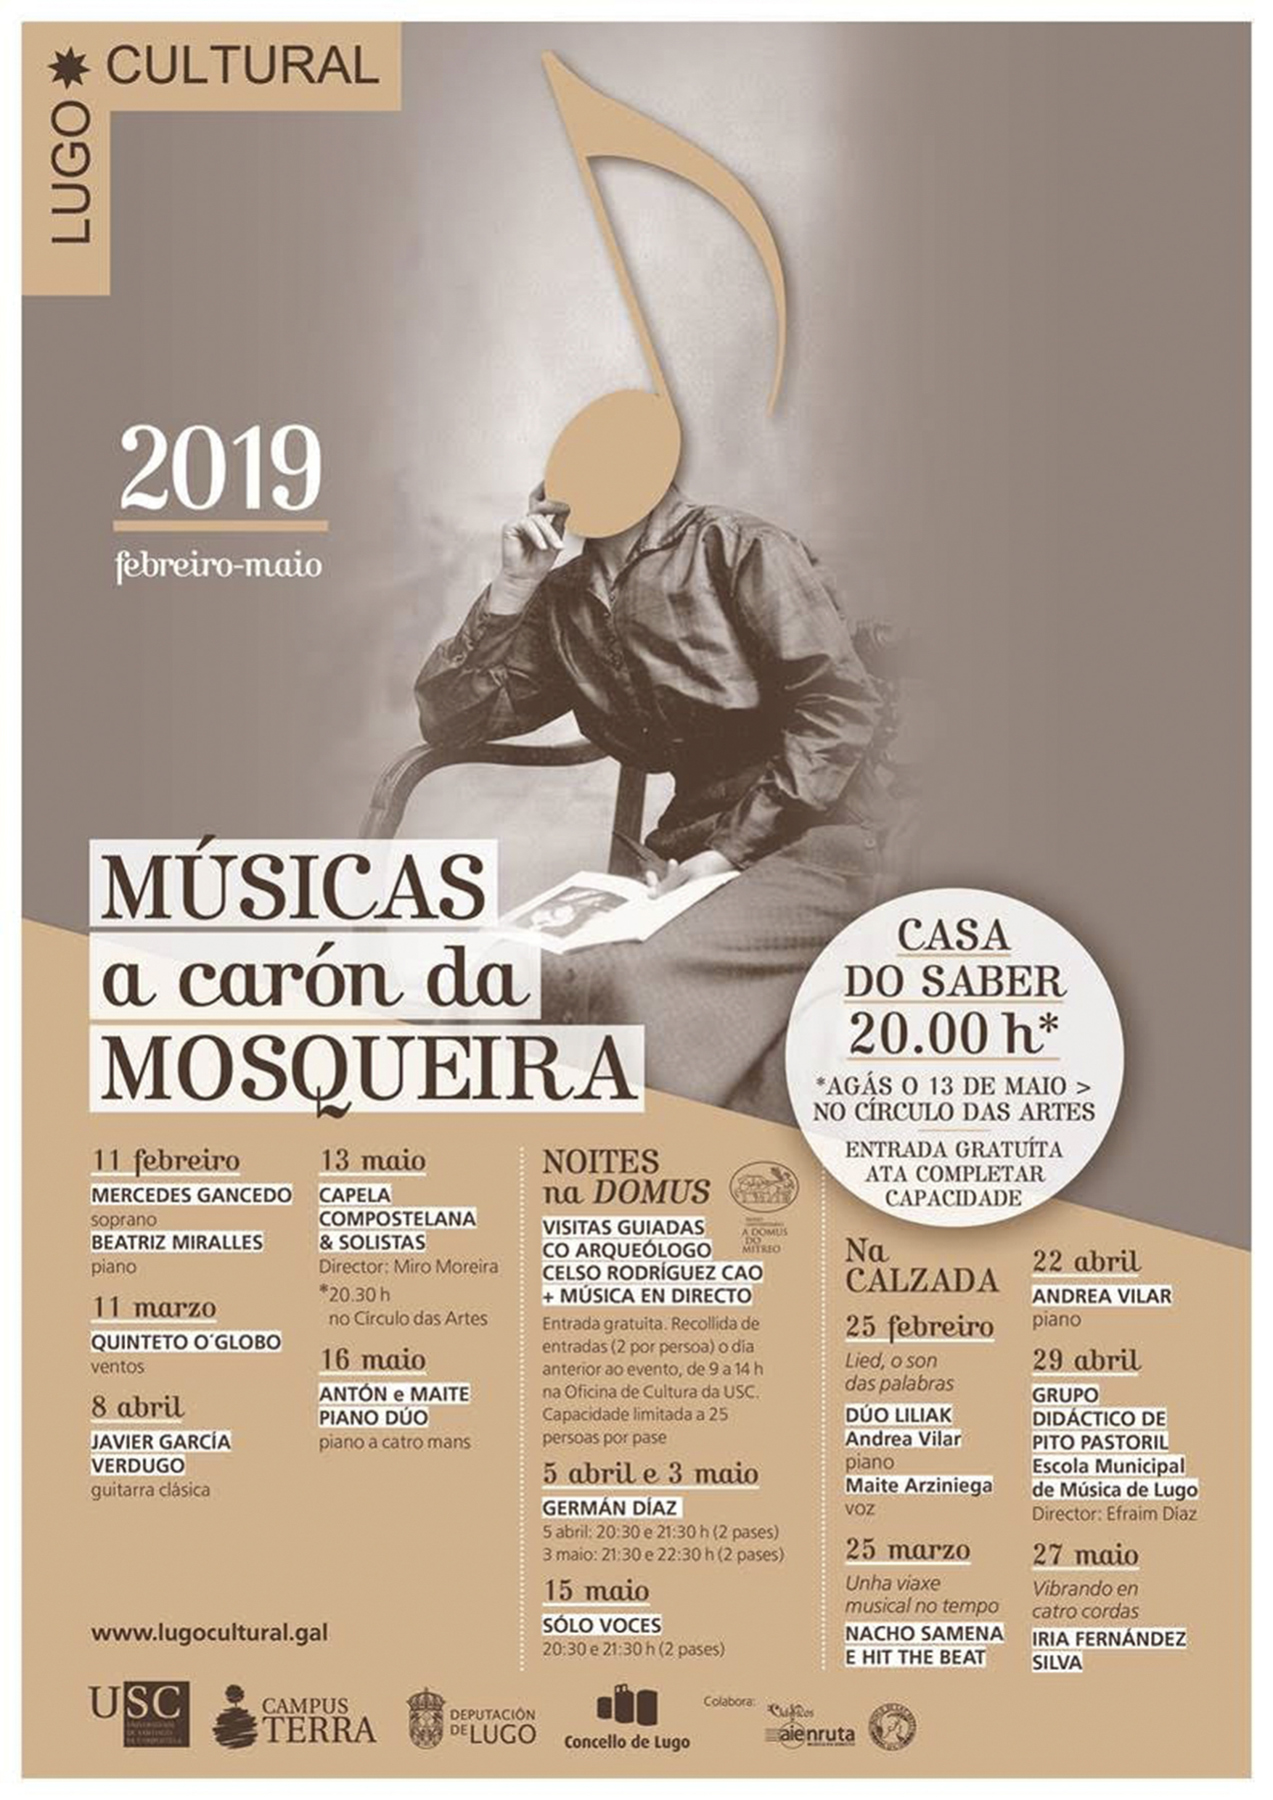 "Músicas ao carón da Mosqueira" de Lugo Cultural